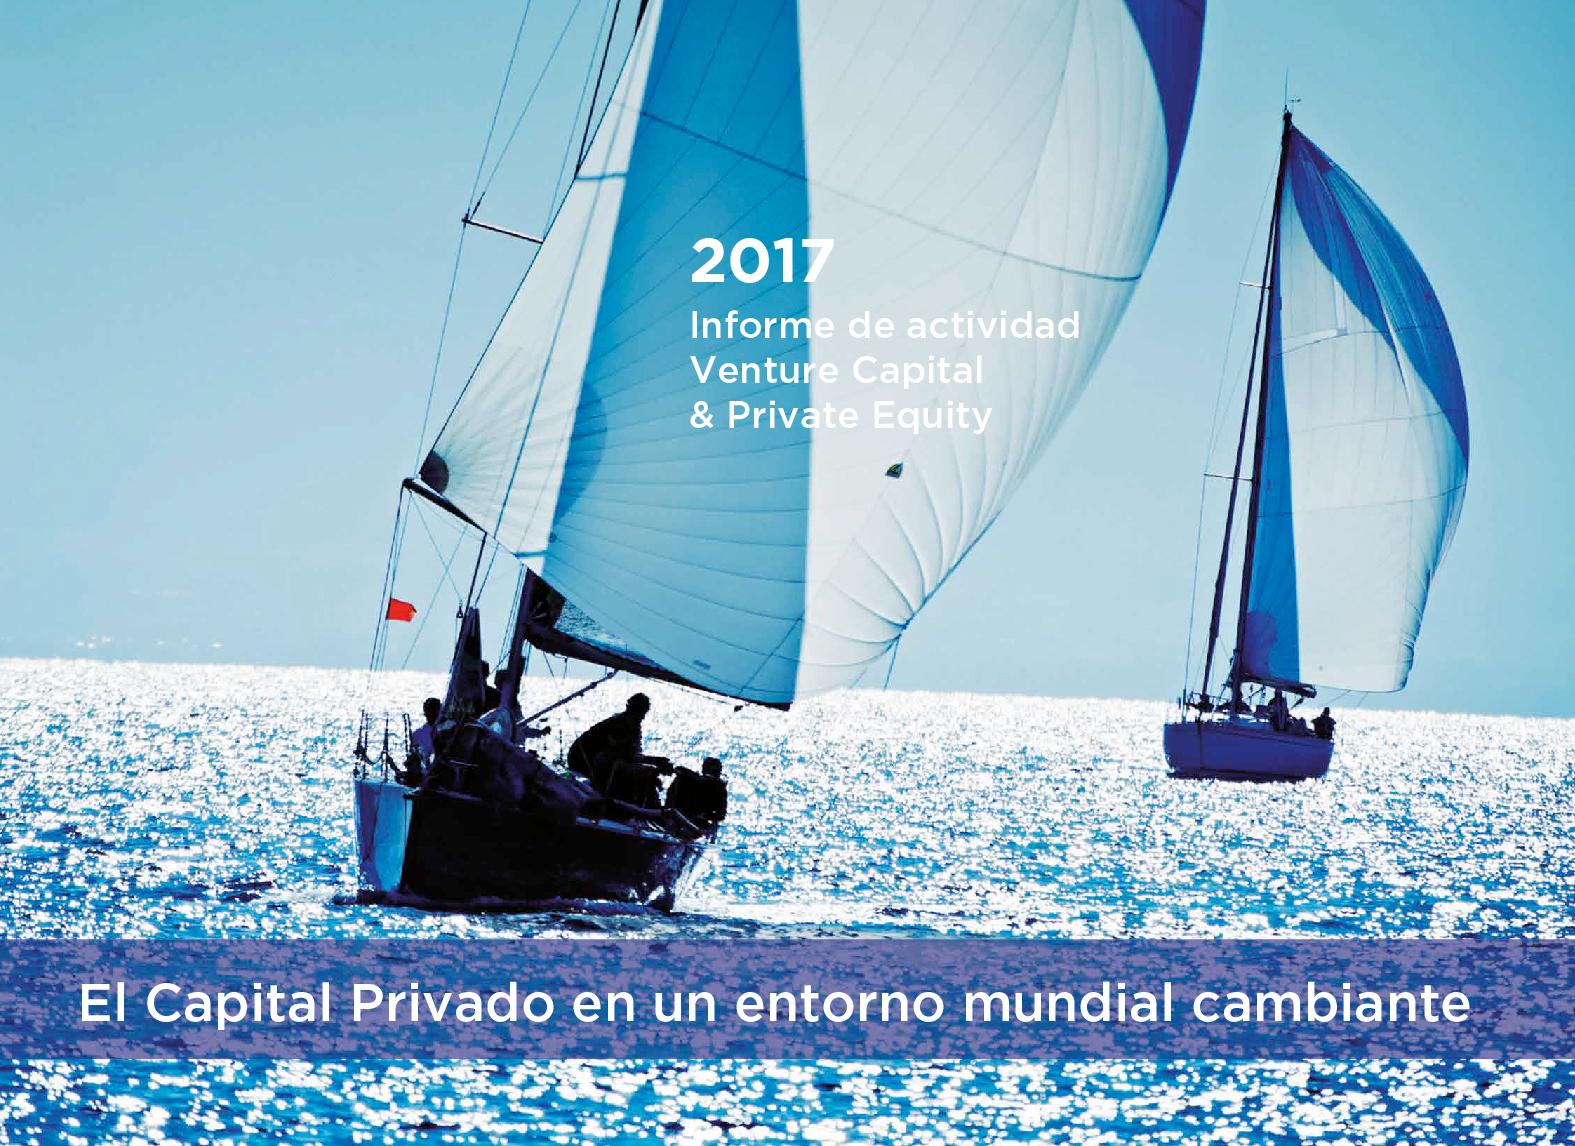 Informe 2017 “Venture Capital & Private Equity en España”